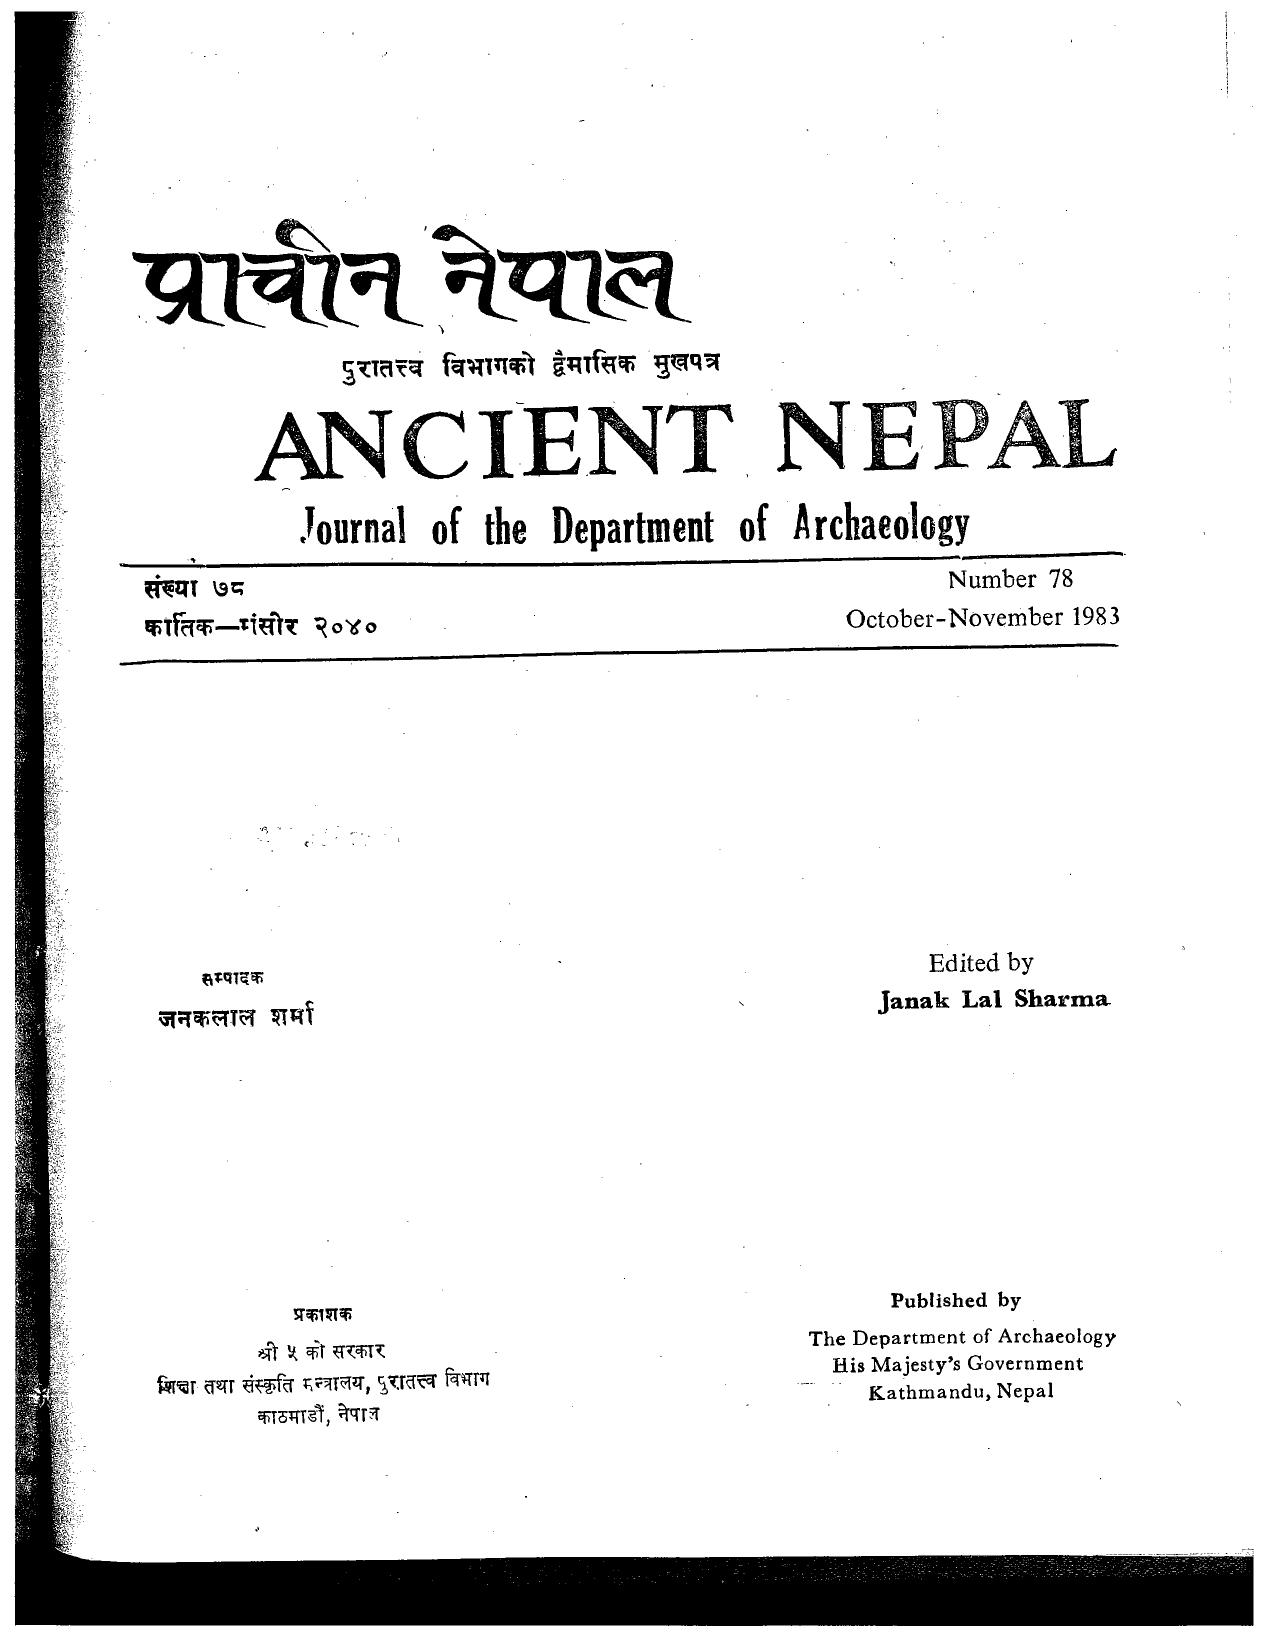 Ancient Nepal 78